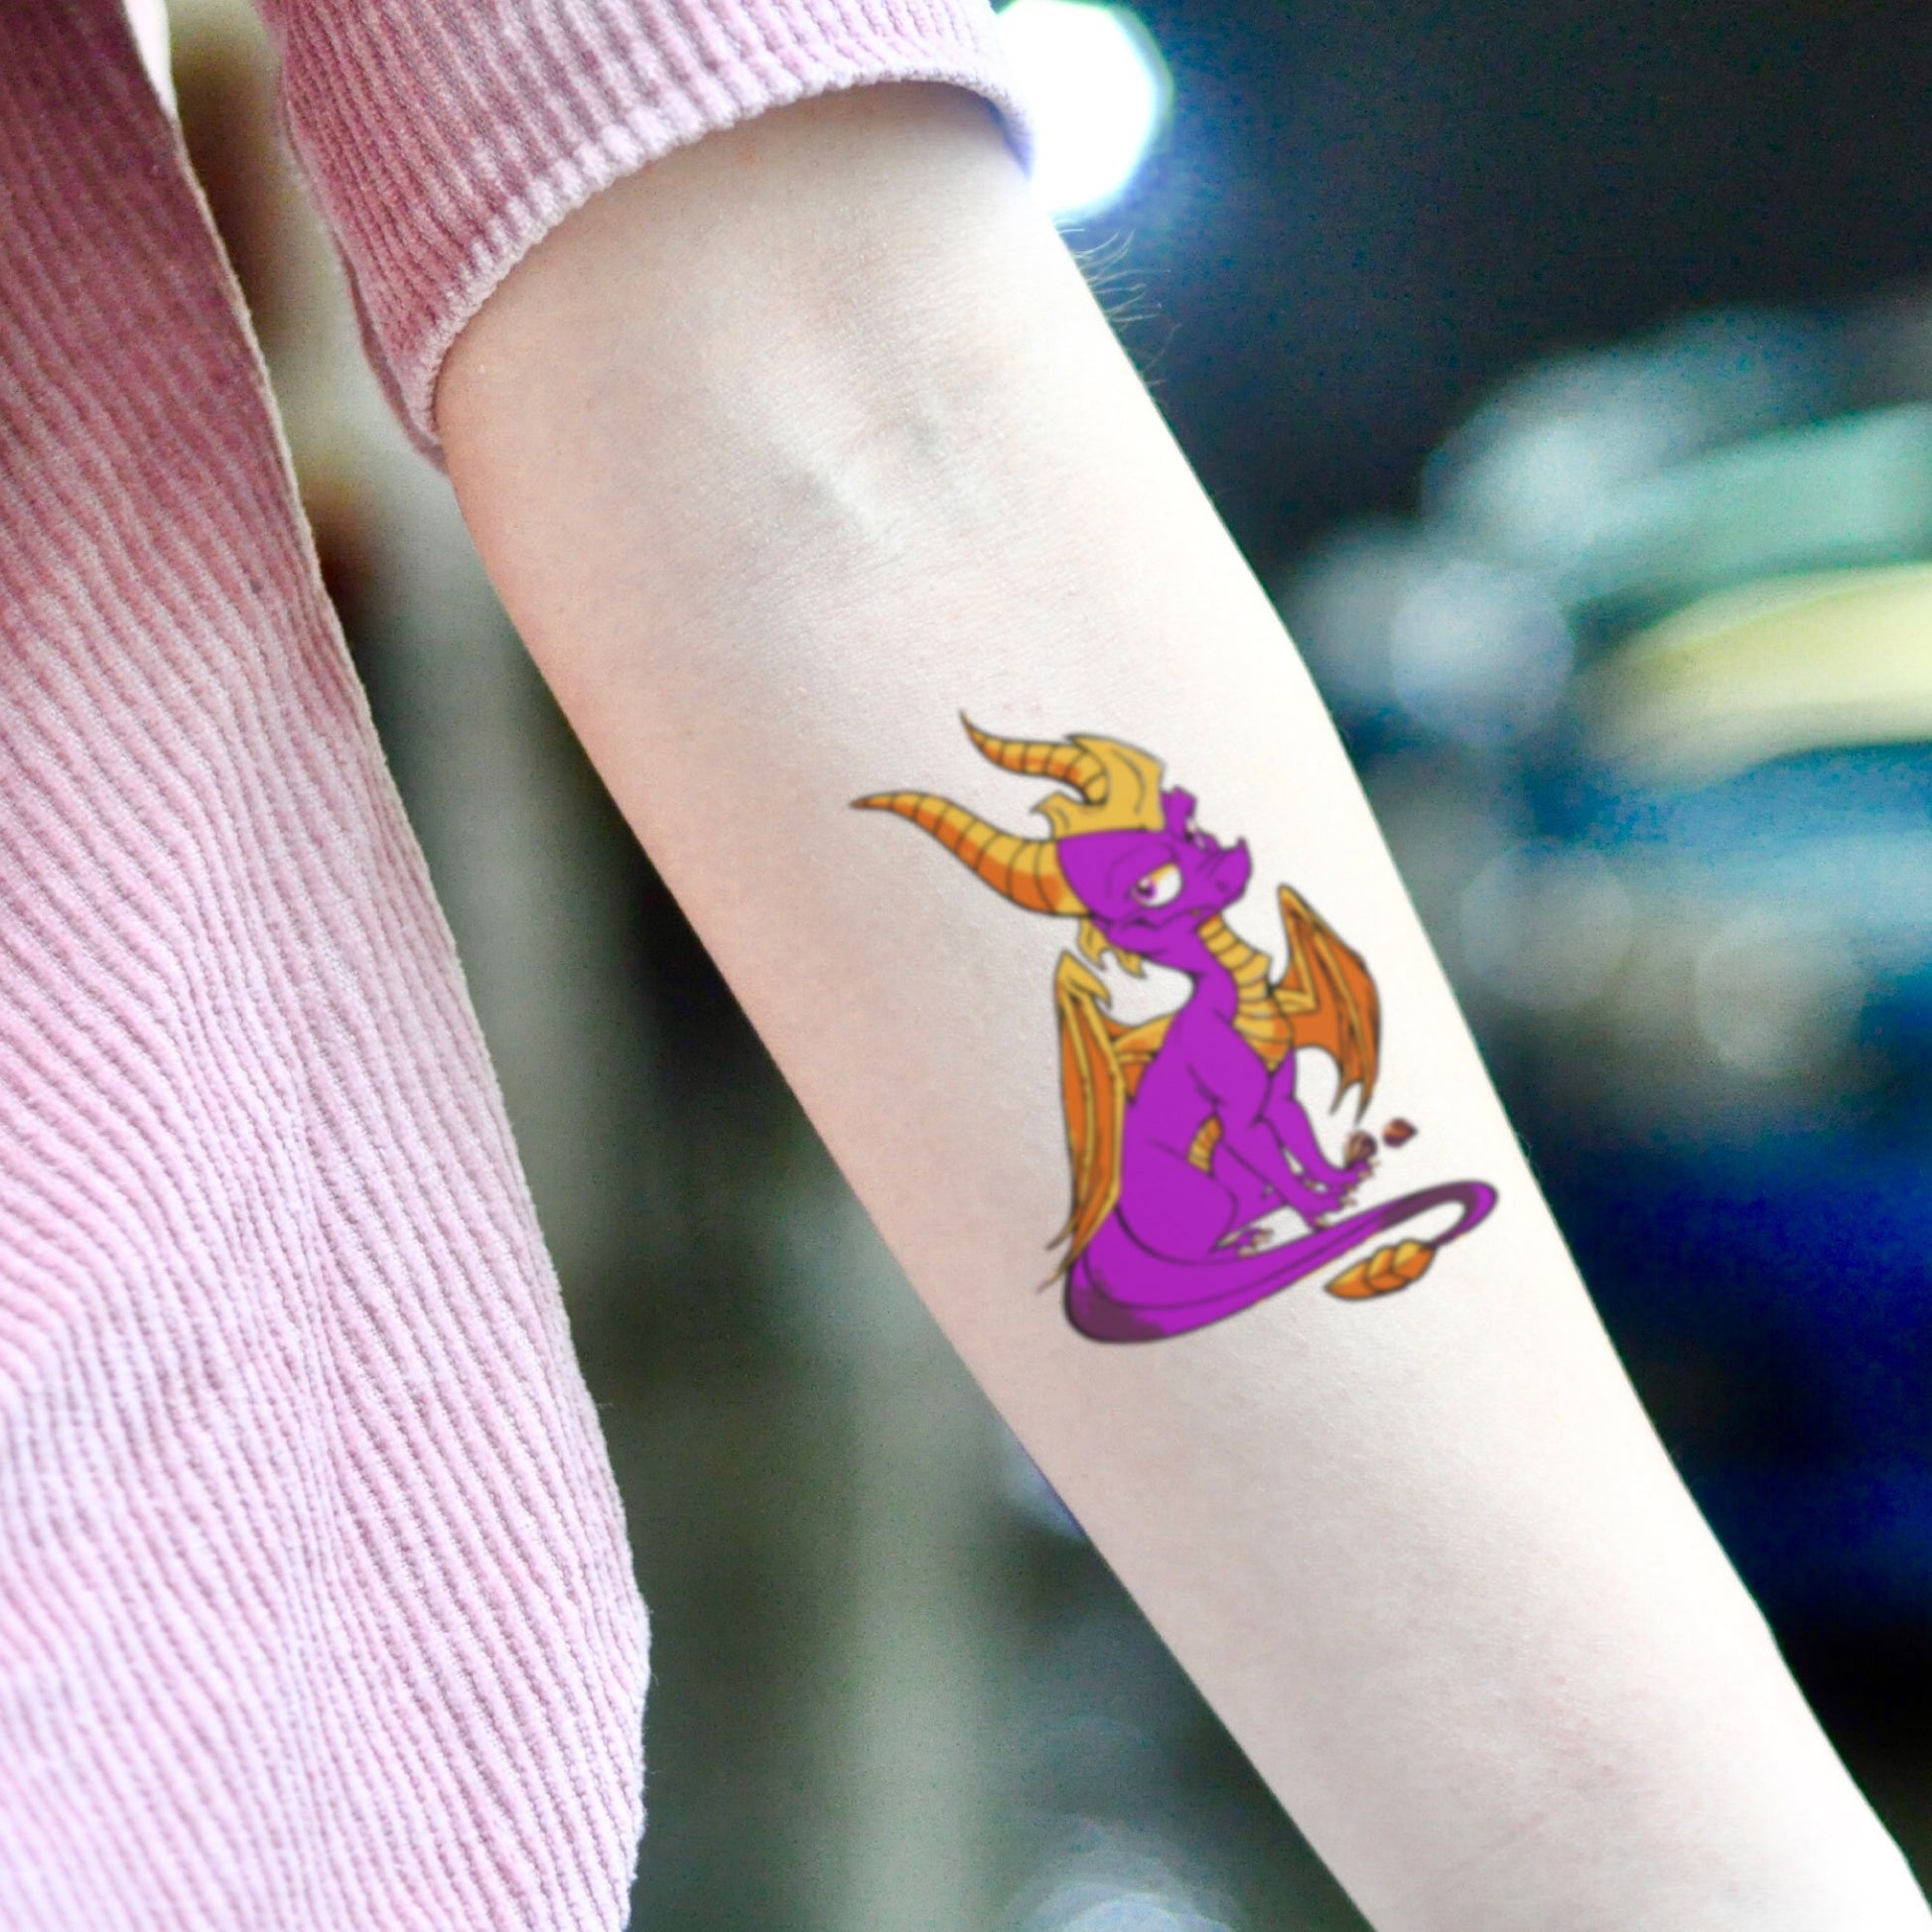 fake small spyro the dragon crystal dragon minimalist temporary tattoo sticker design idea on inner arm